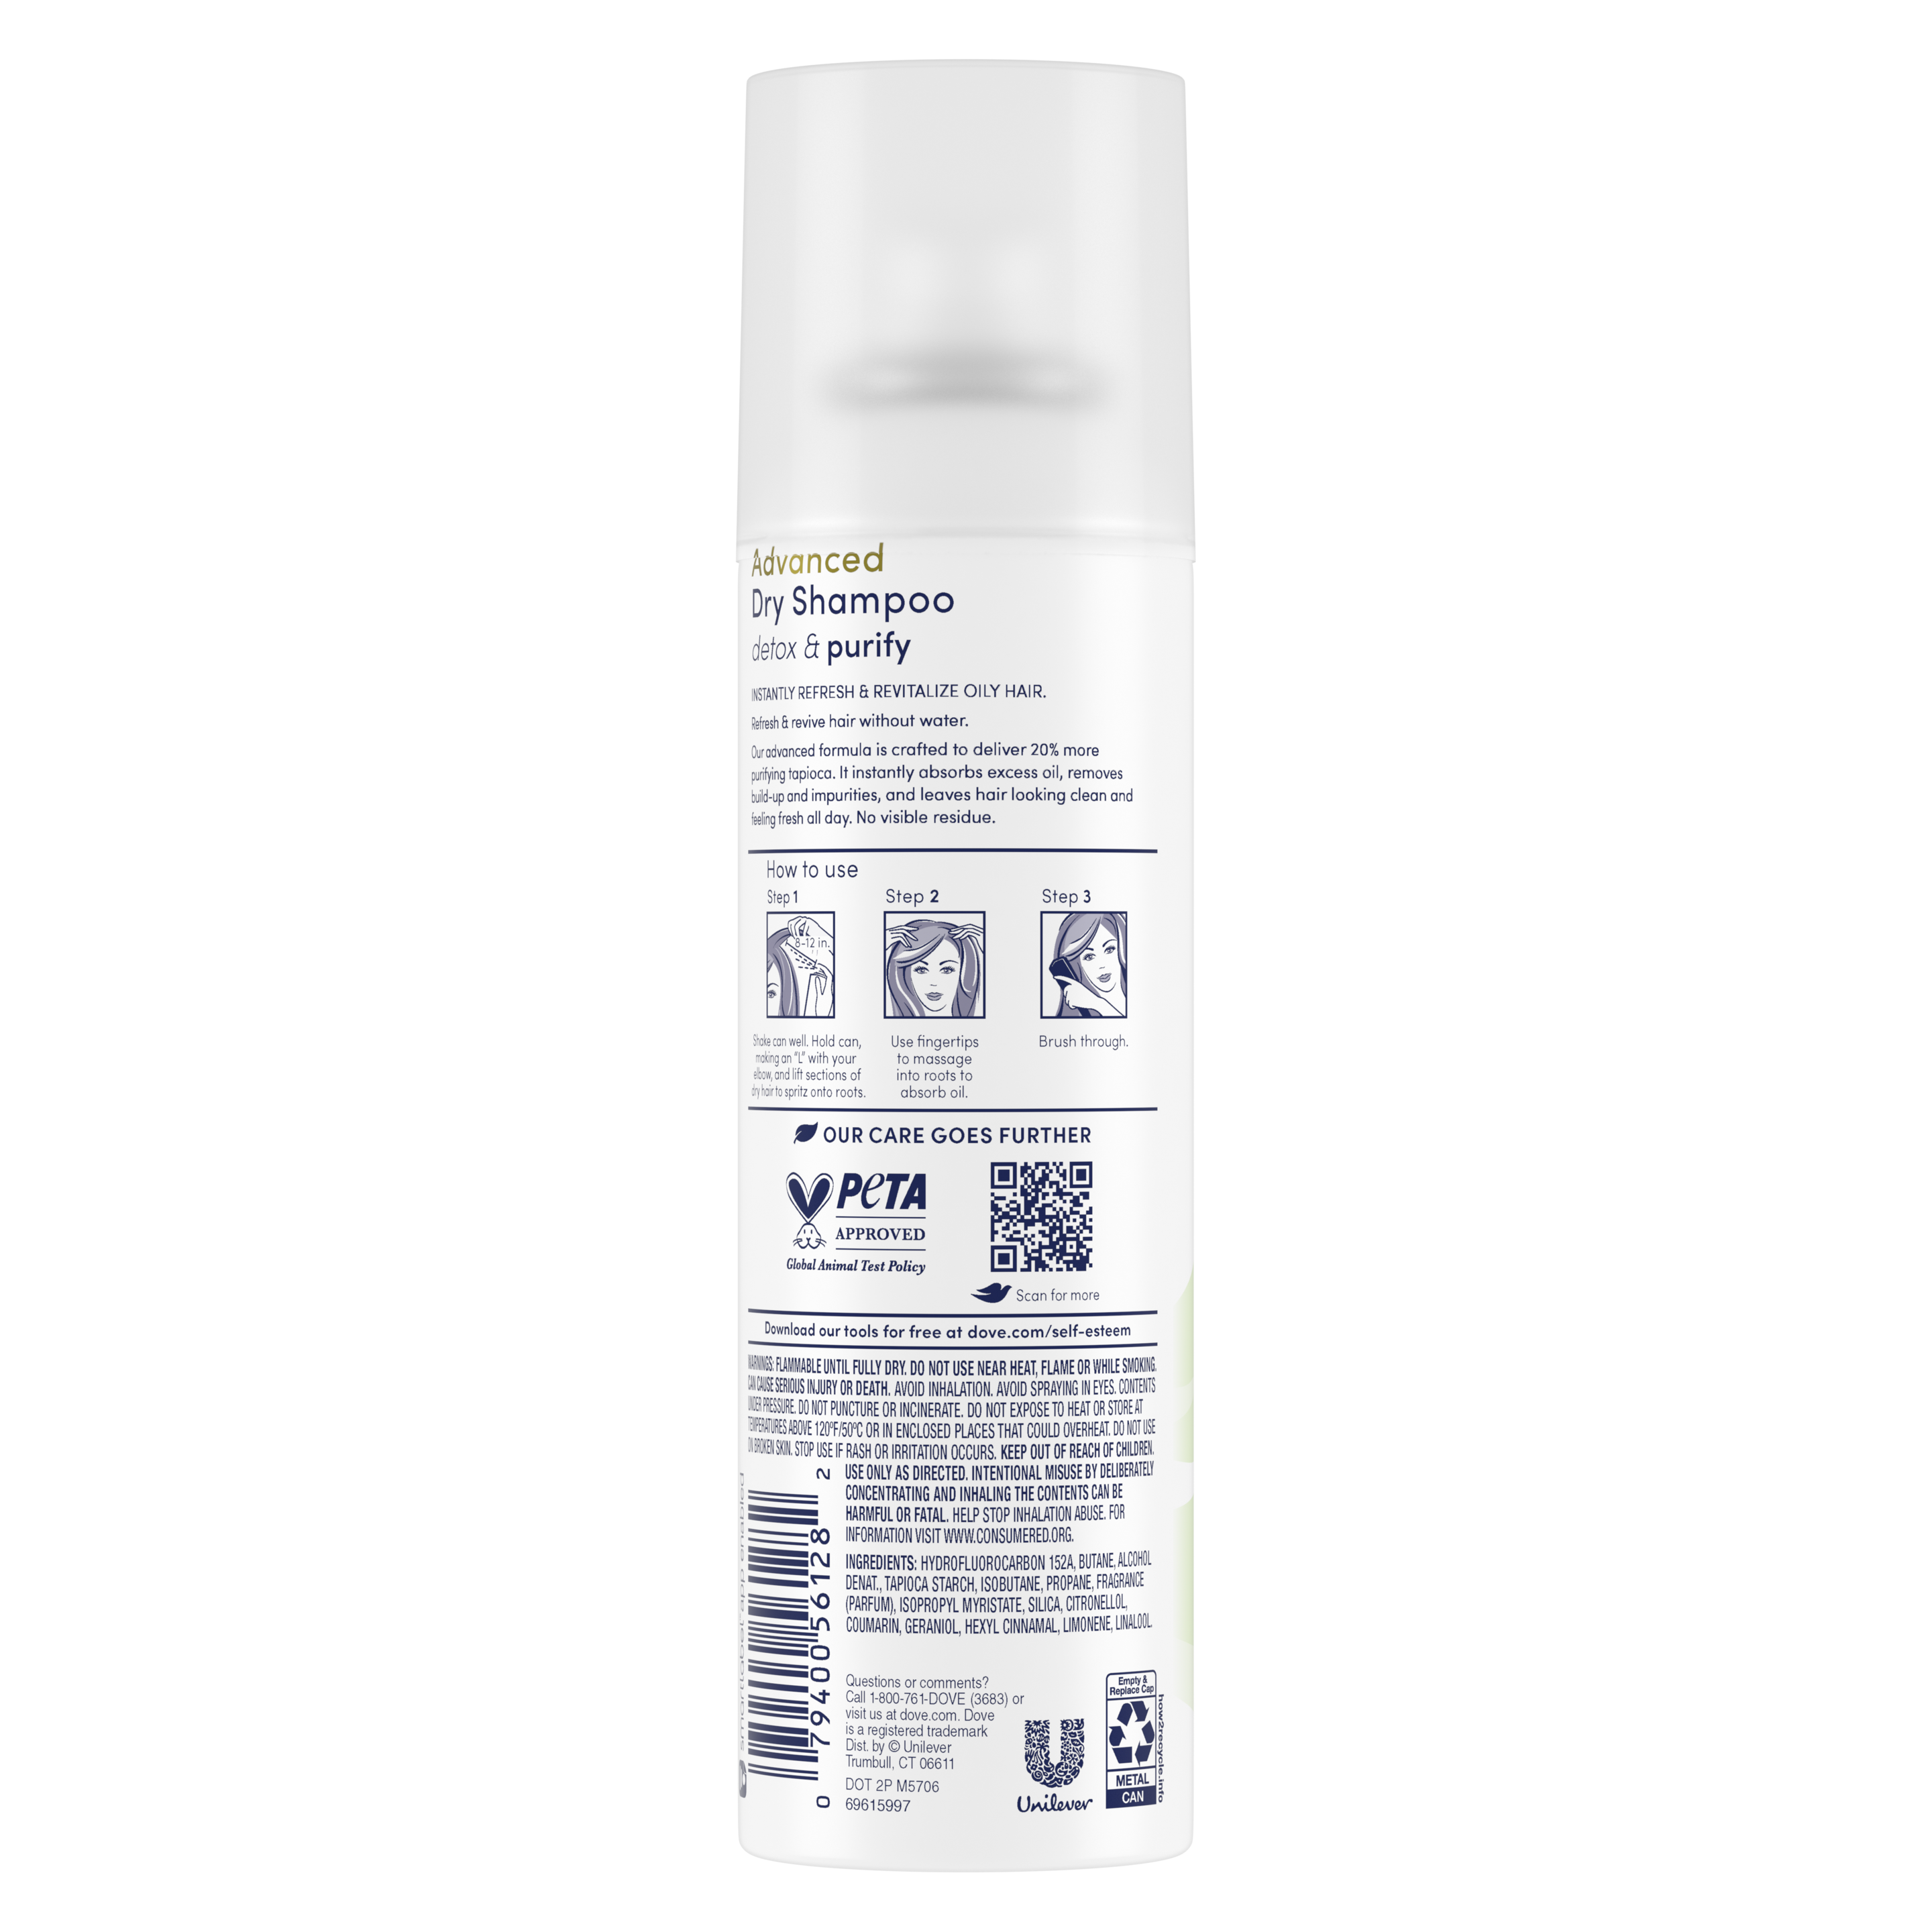 Dove Detox and Purify Dry Shampoo 5 oz